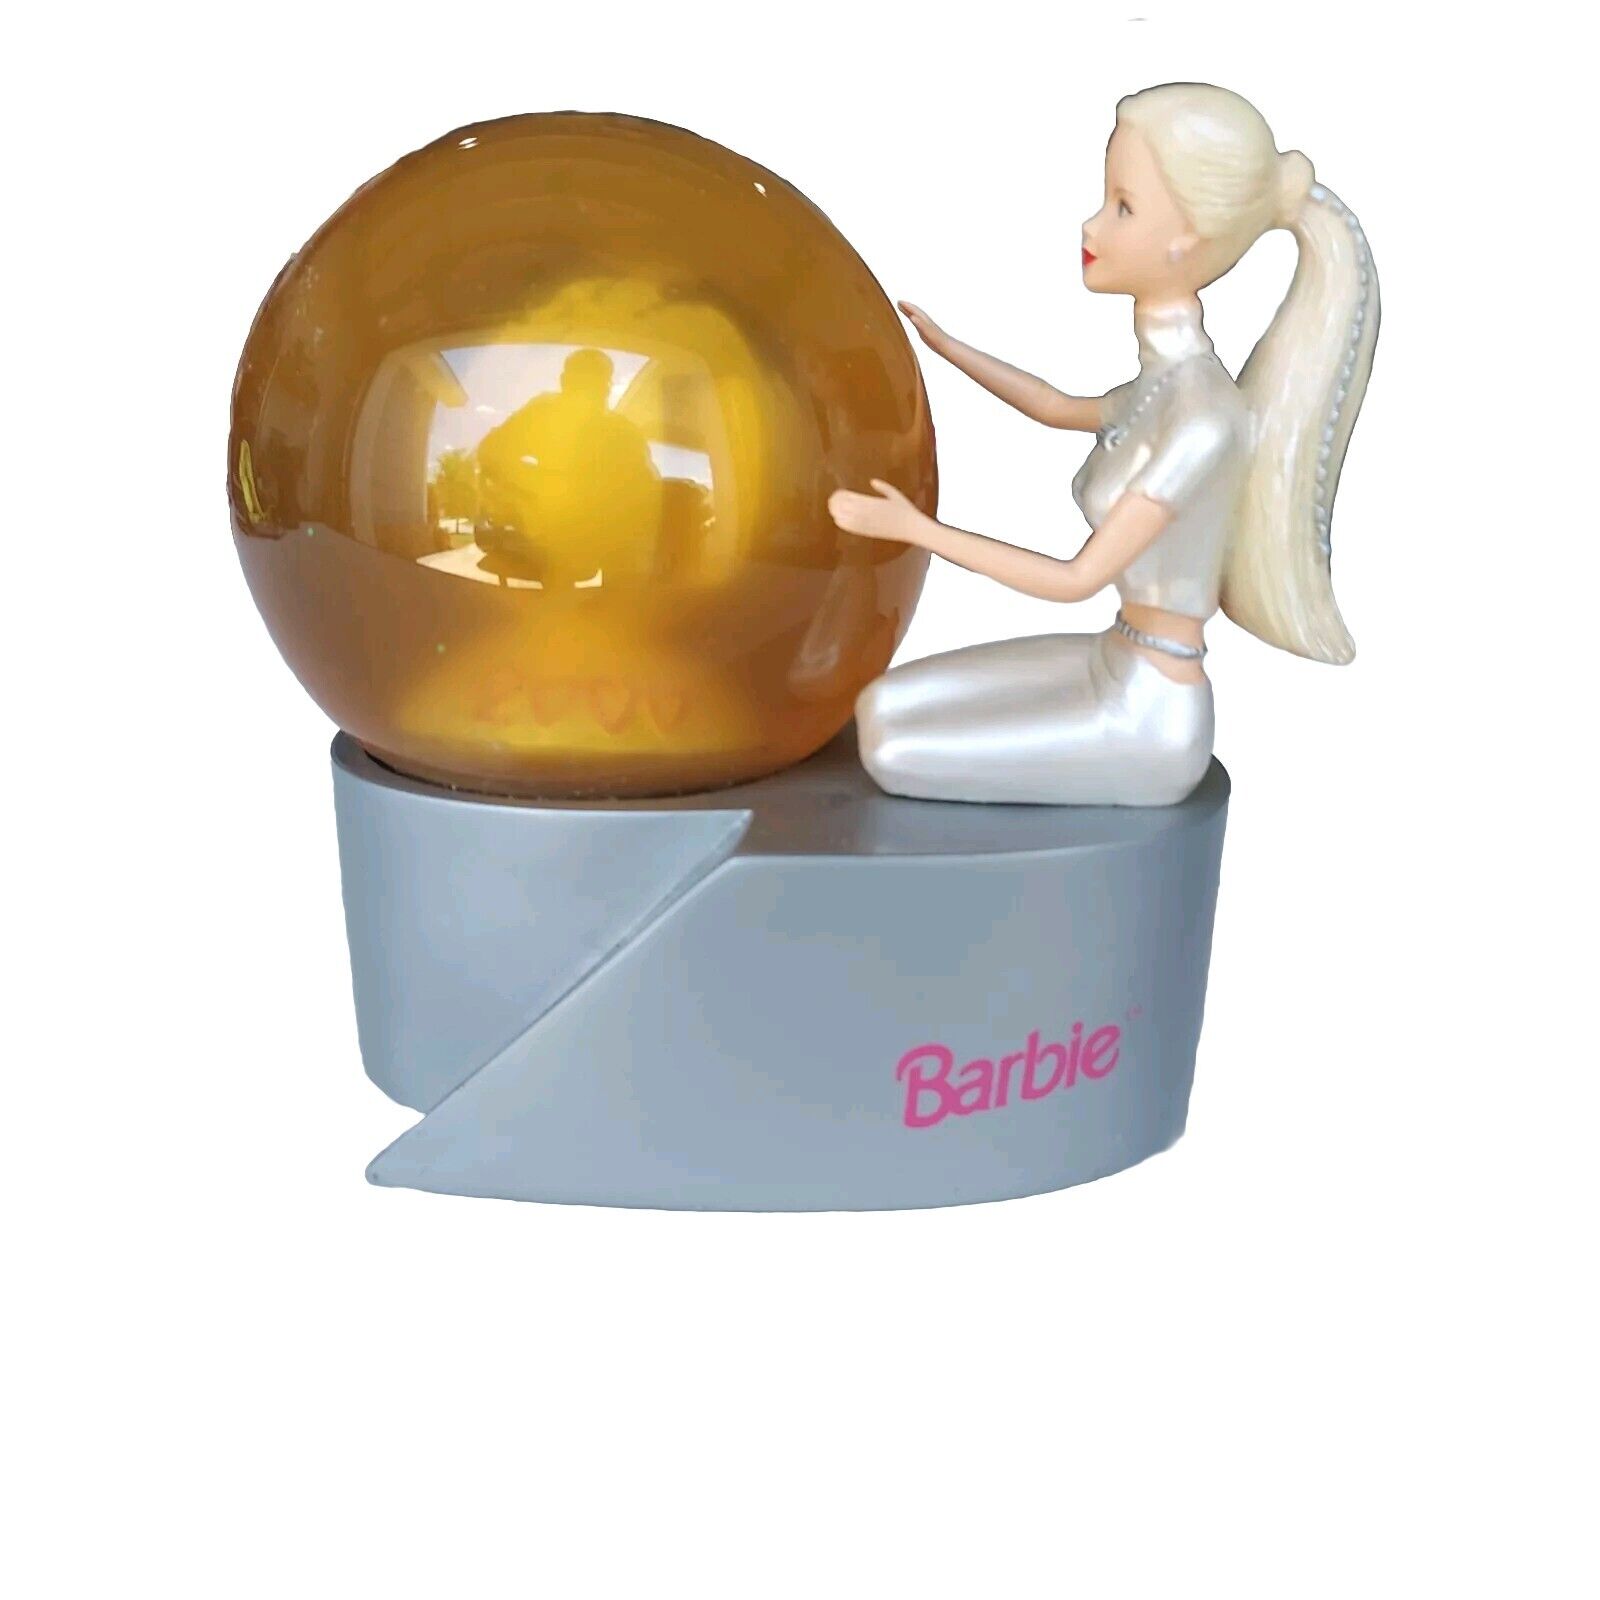 VTG 1999 Barbie Y2K Musical Snow Globe, Used, Yellow Liquid(?)